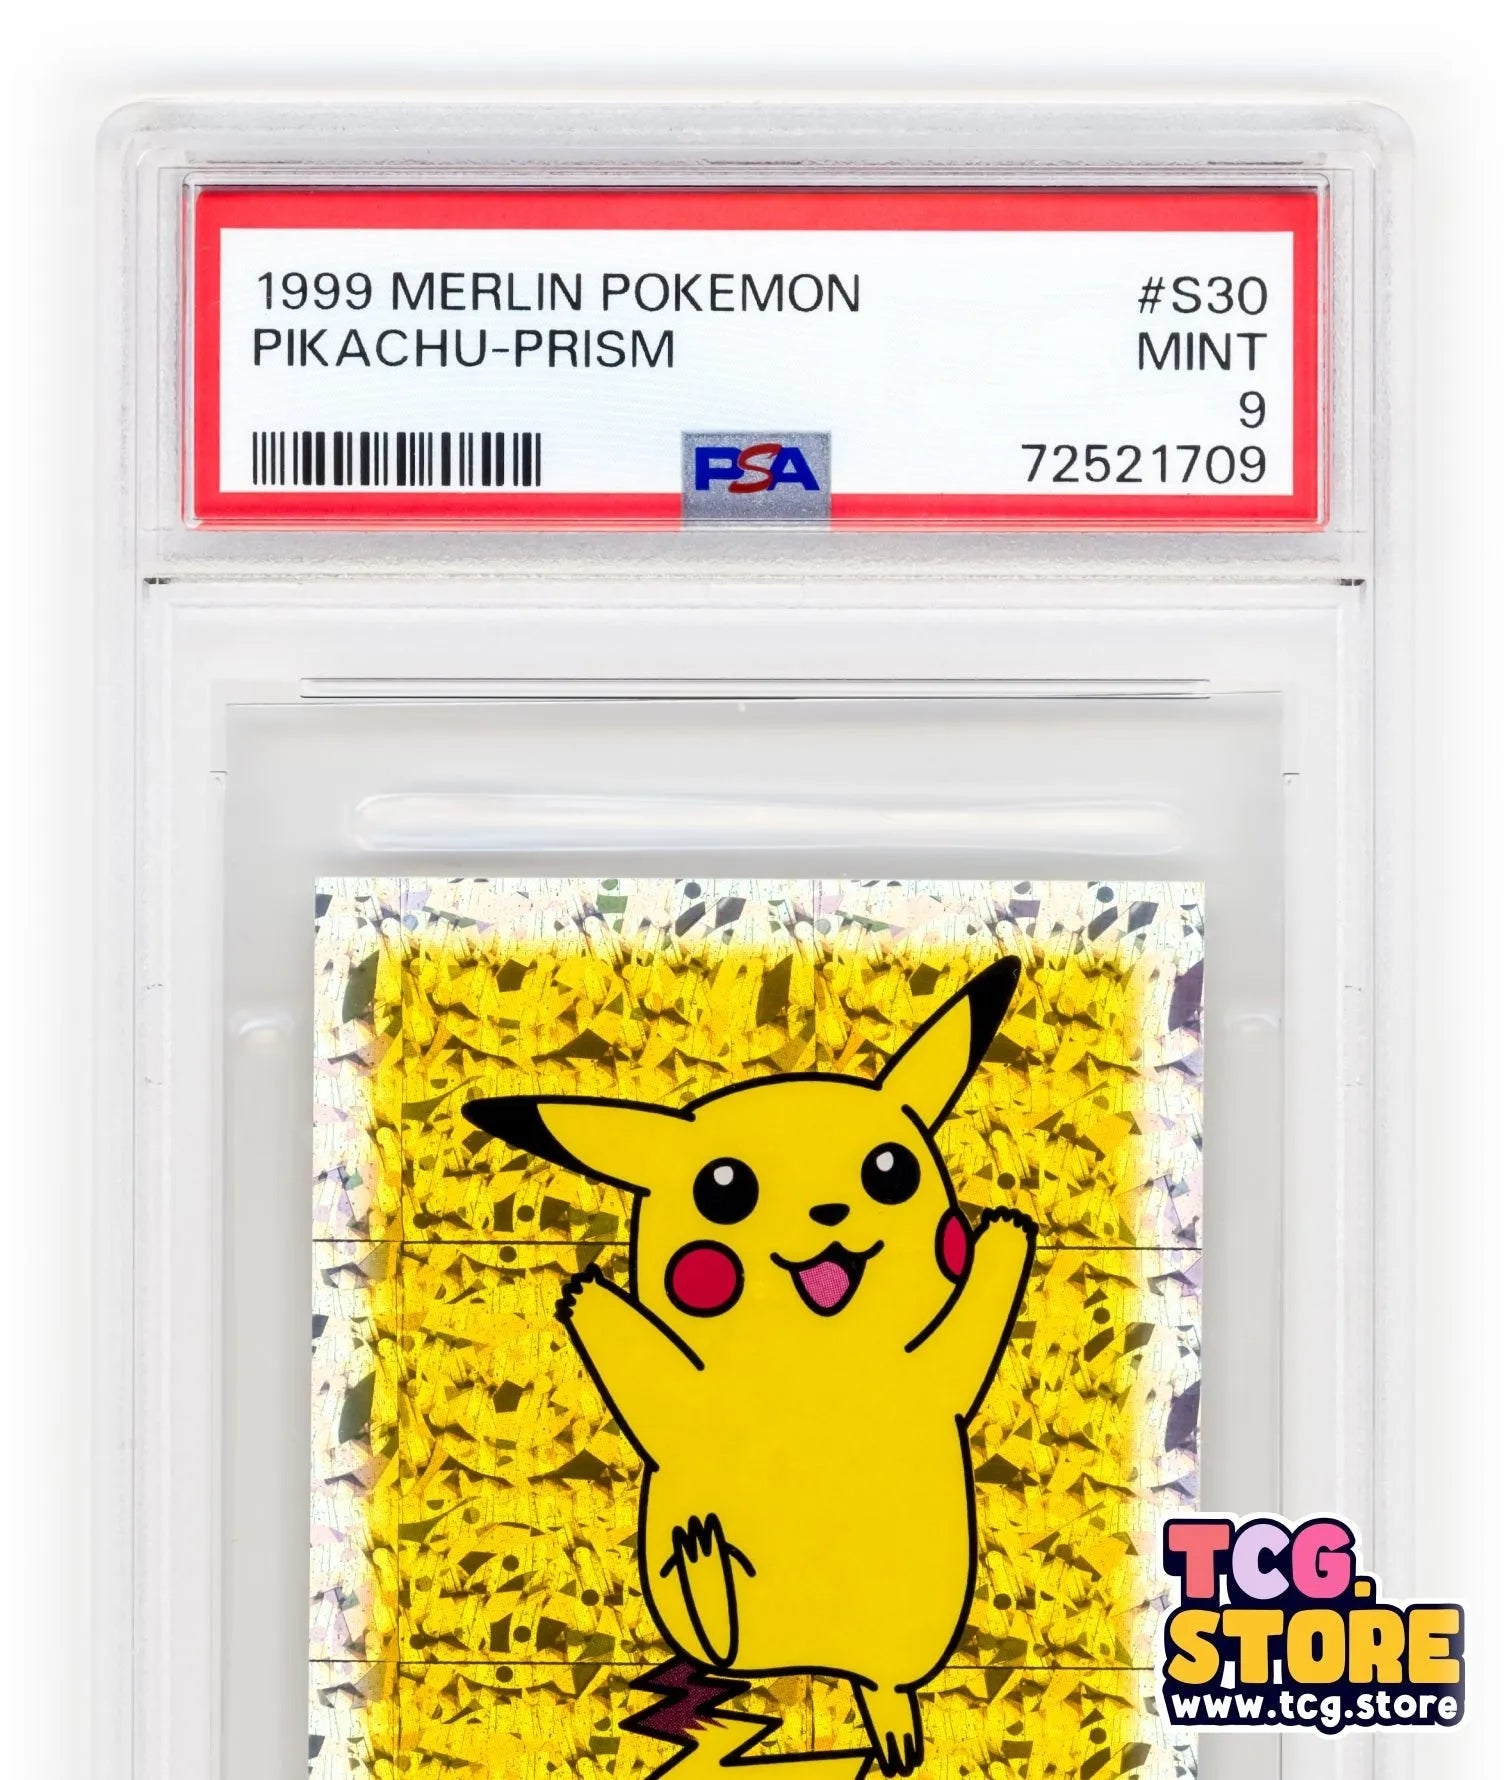 1999 Merlin Pokemon Pikachu #S30 Prism Sticker - PSA 9 - TCG.Store